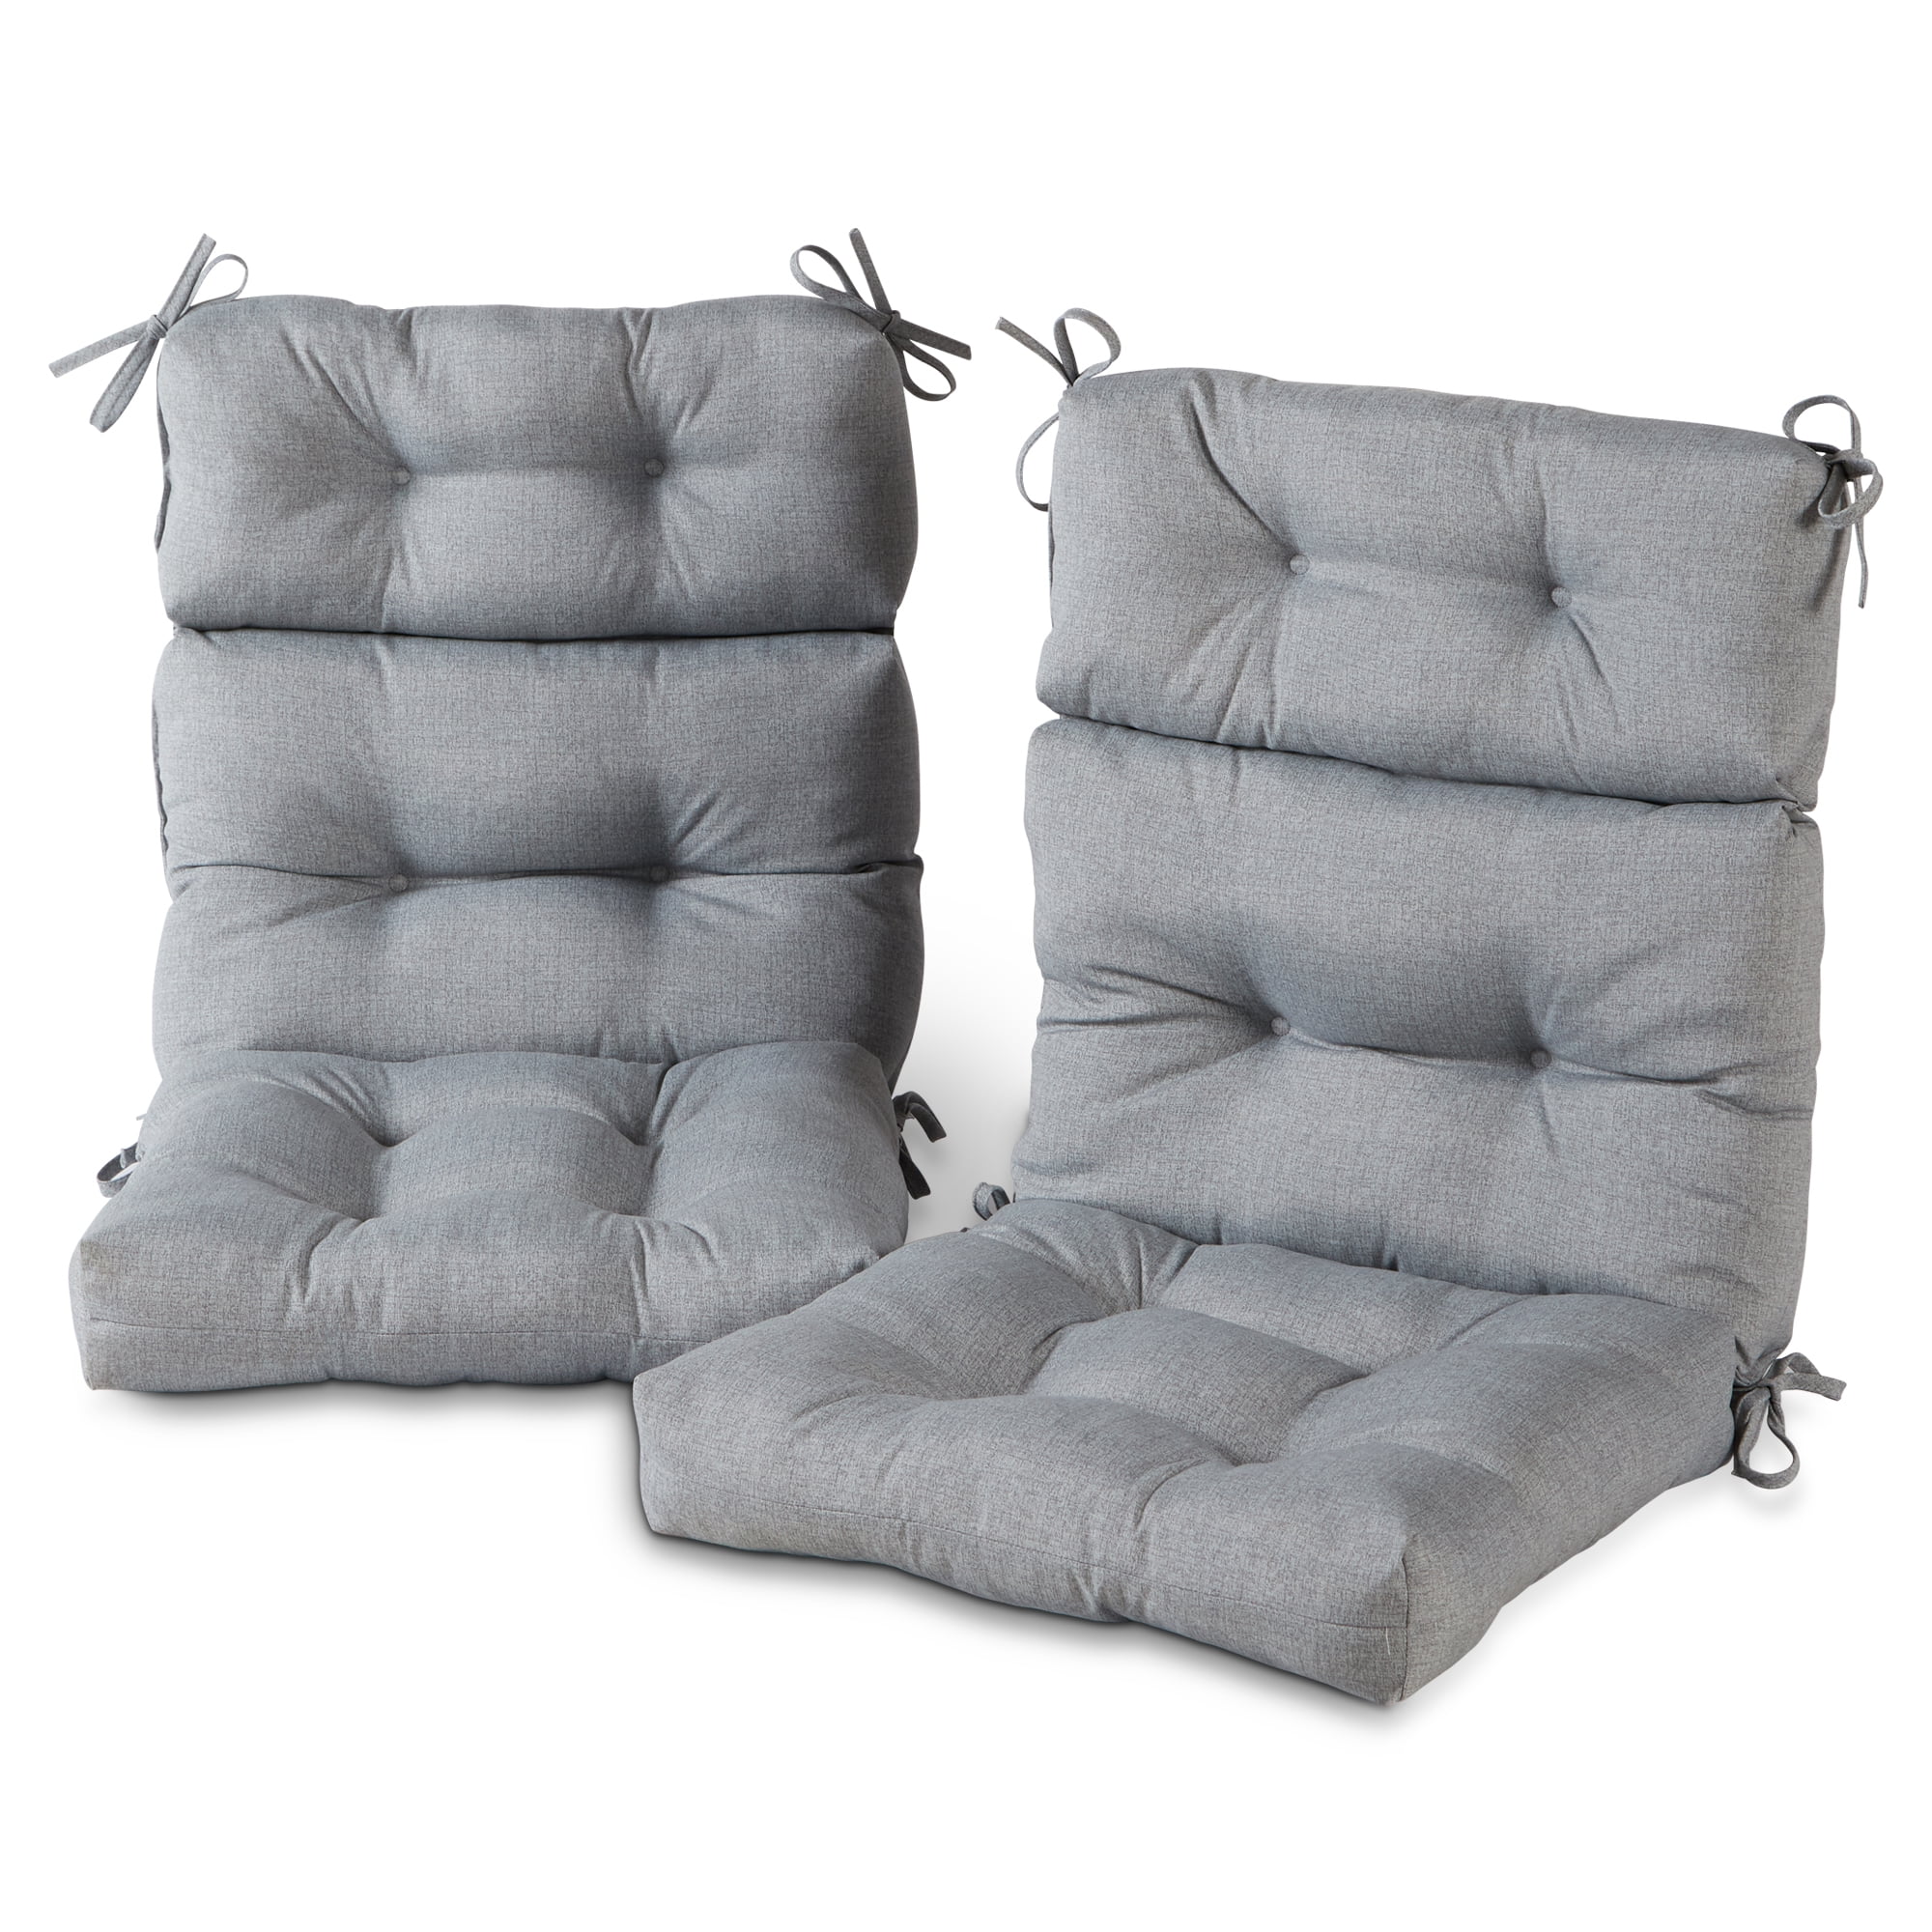 Minimalist High Chair Cushion Kmart for Simple Design